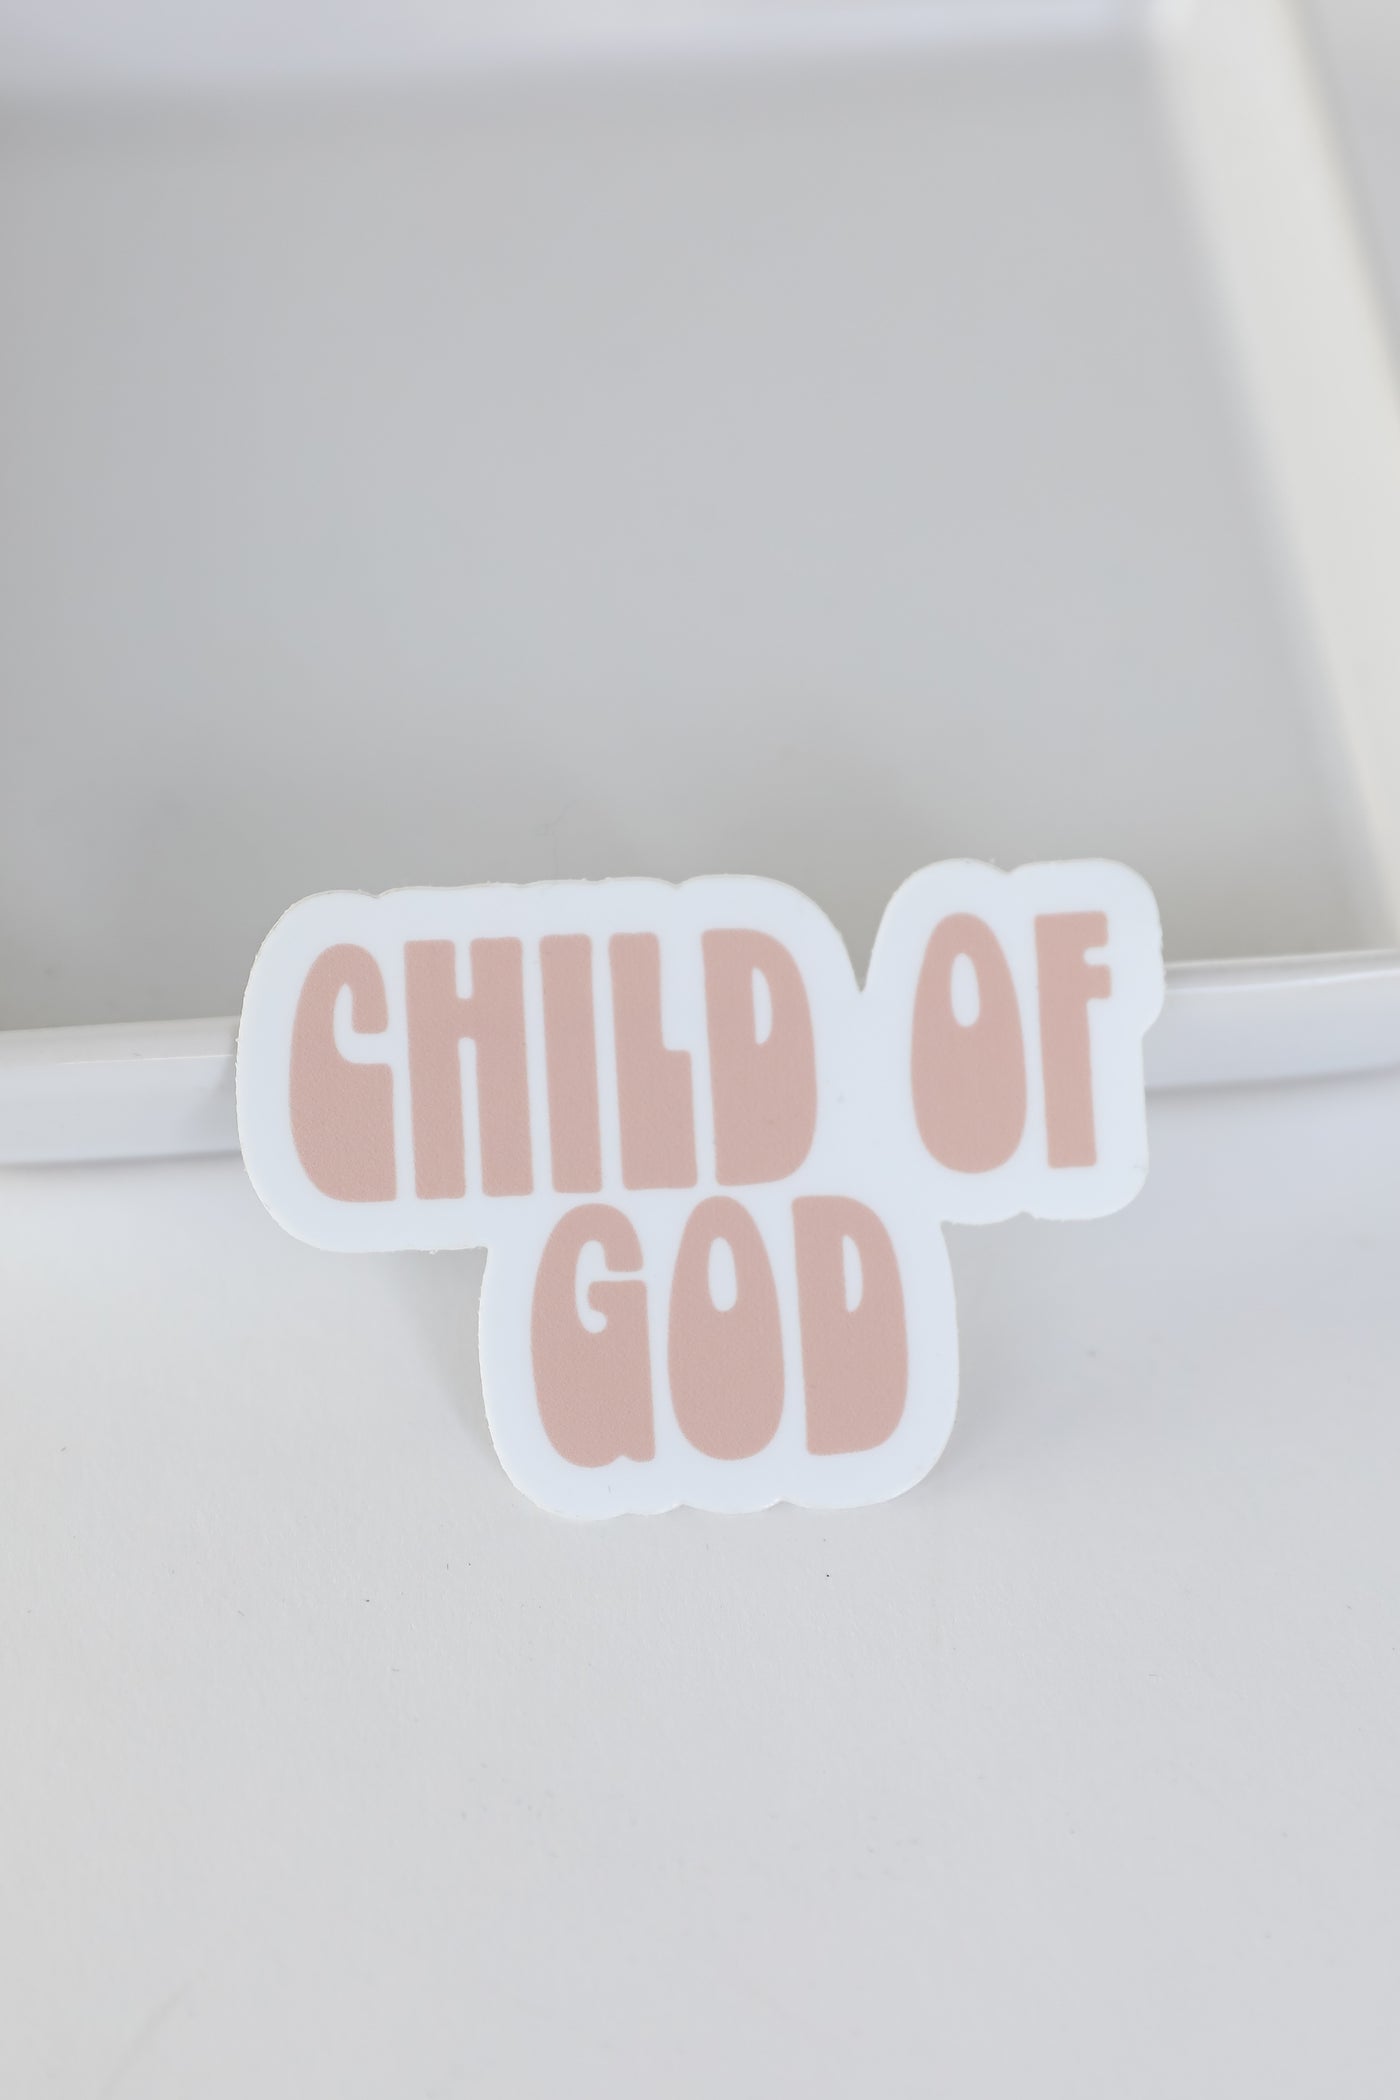 Child Of God Sticker from dress up